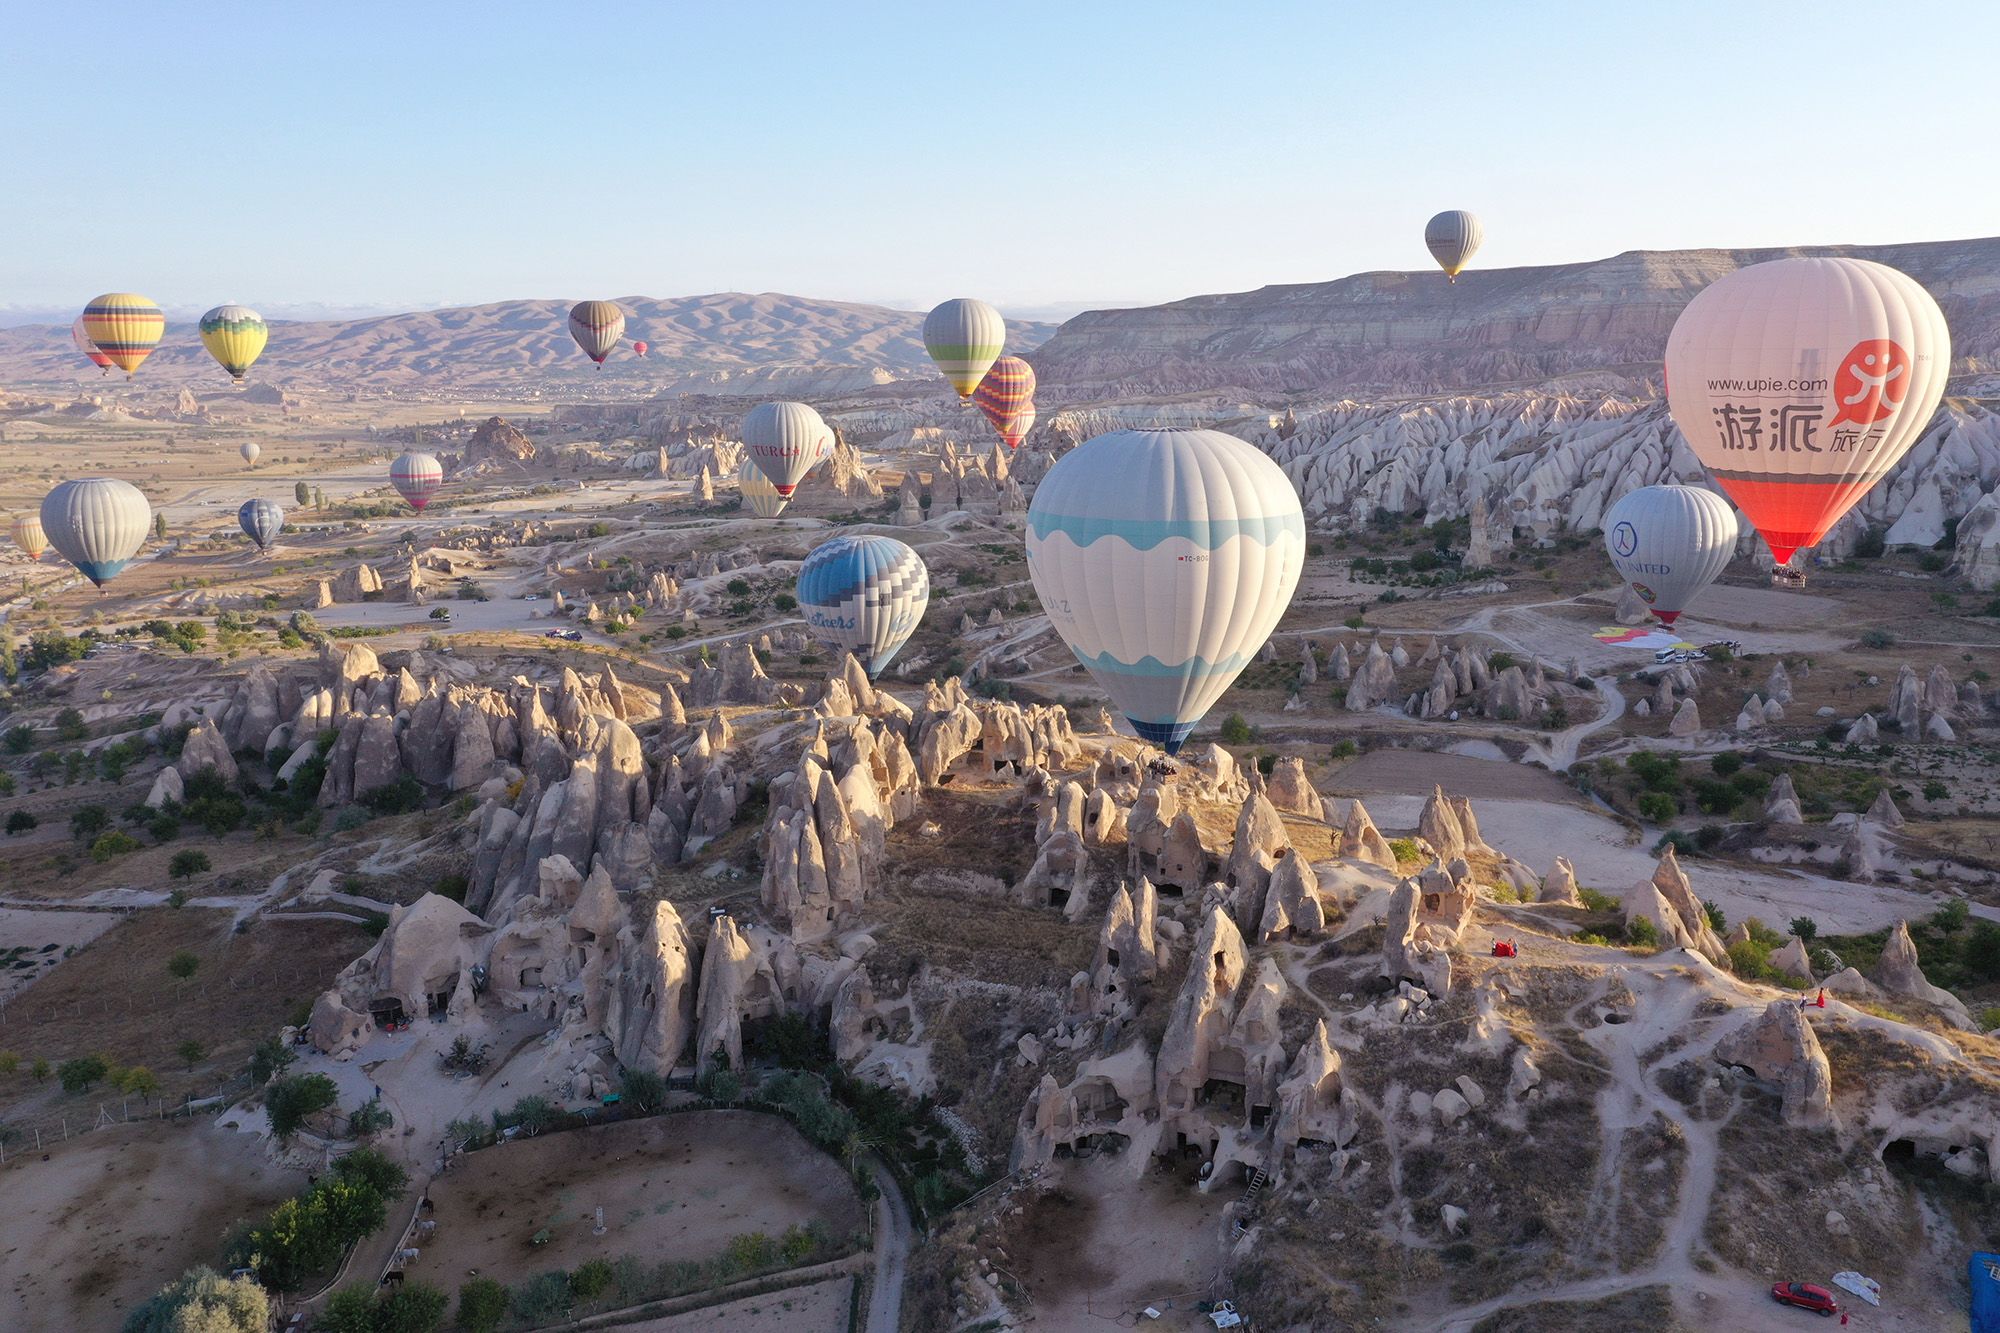 Ja Afrekenen dief Two Spanish tourists killed in hot air balloon landing in Turkey | CNN